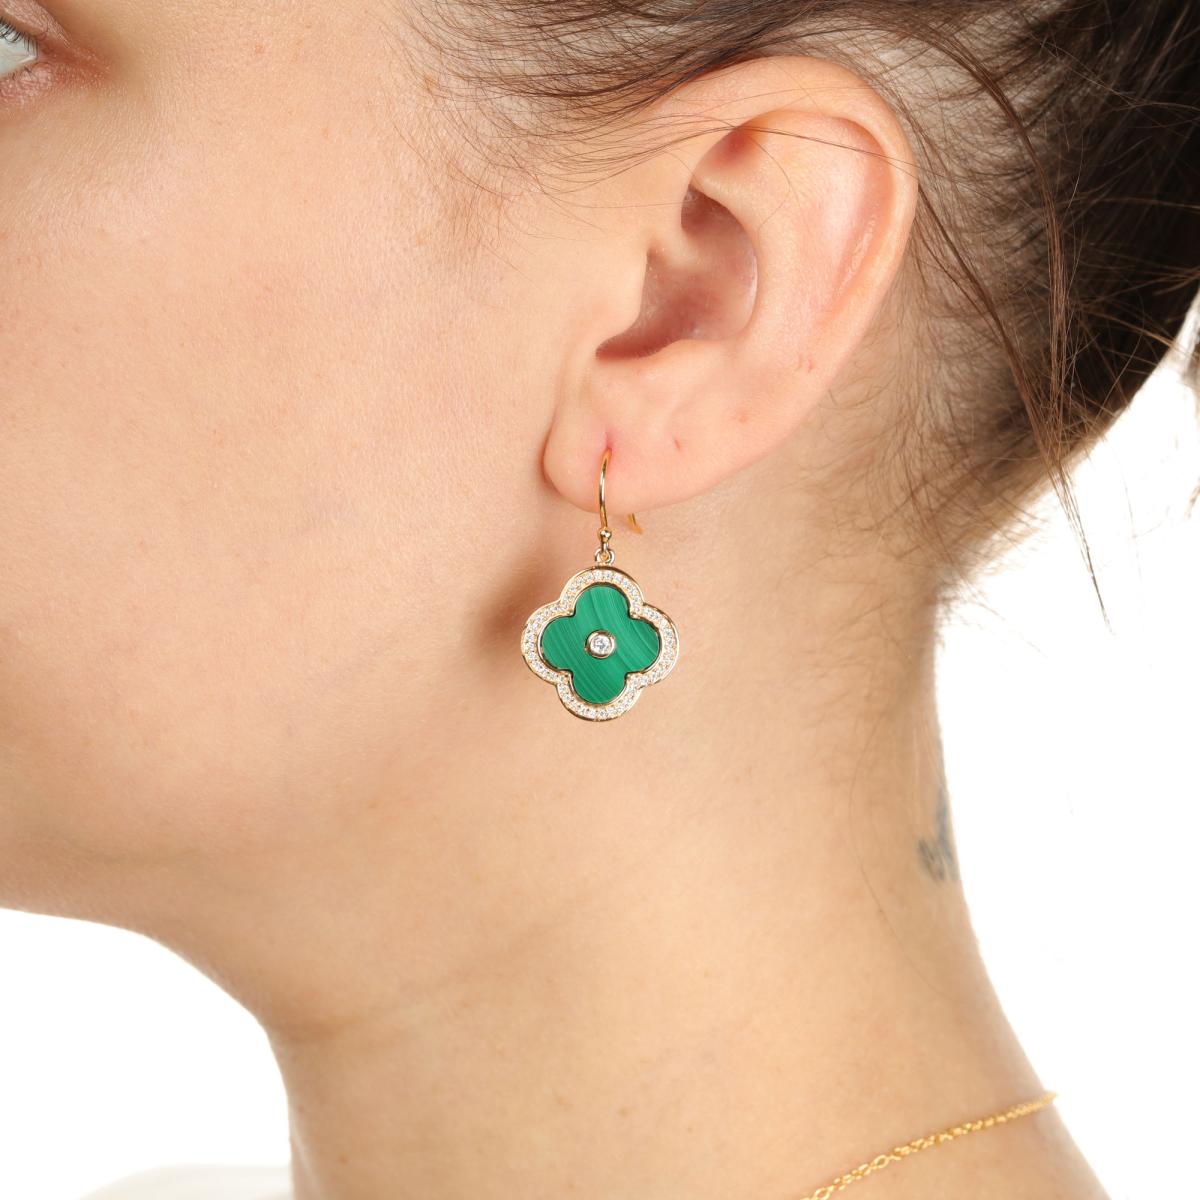 50815-earrings-fashion-jewelry-yellow-sterling-silver-50815-4